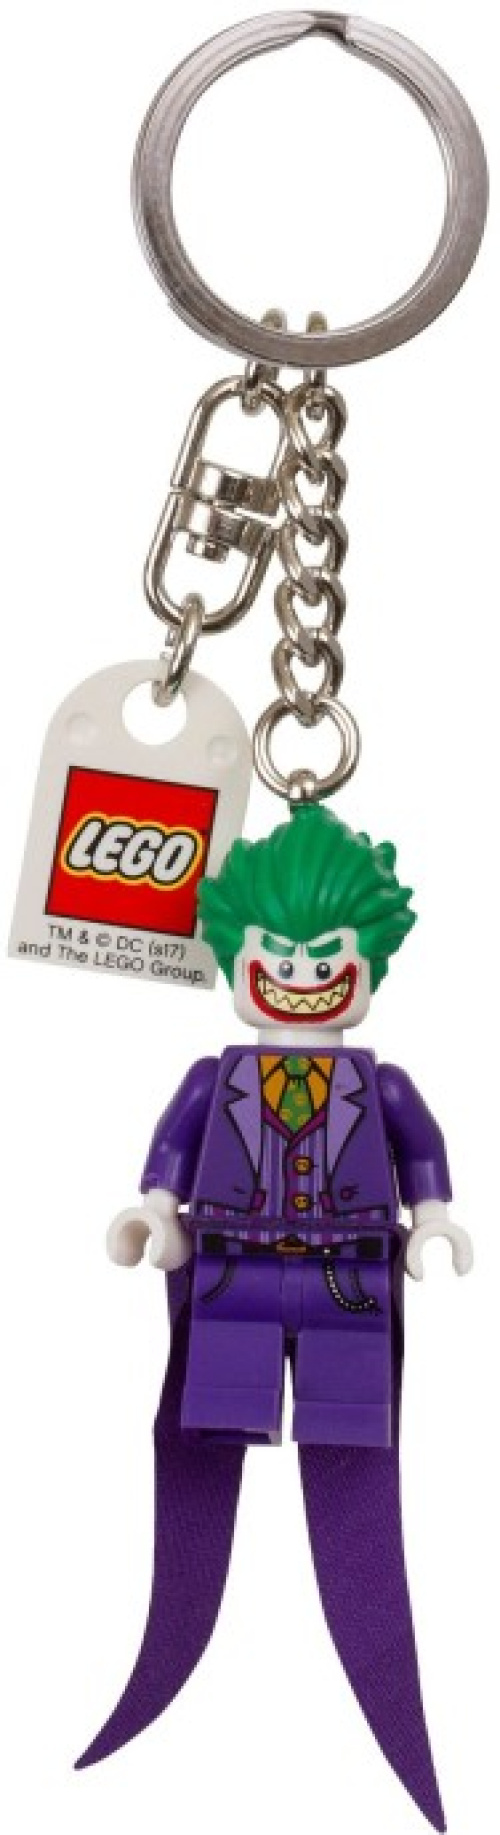 853633-1 The Joker Key Chain